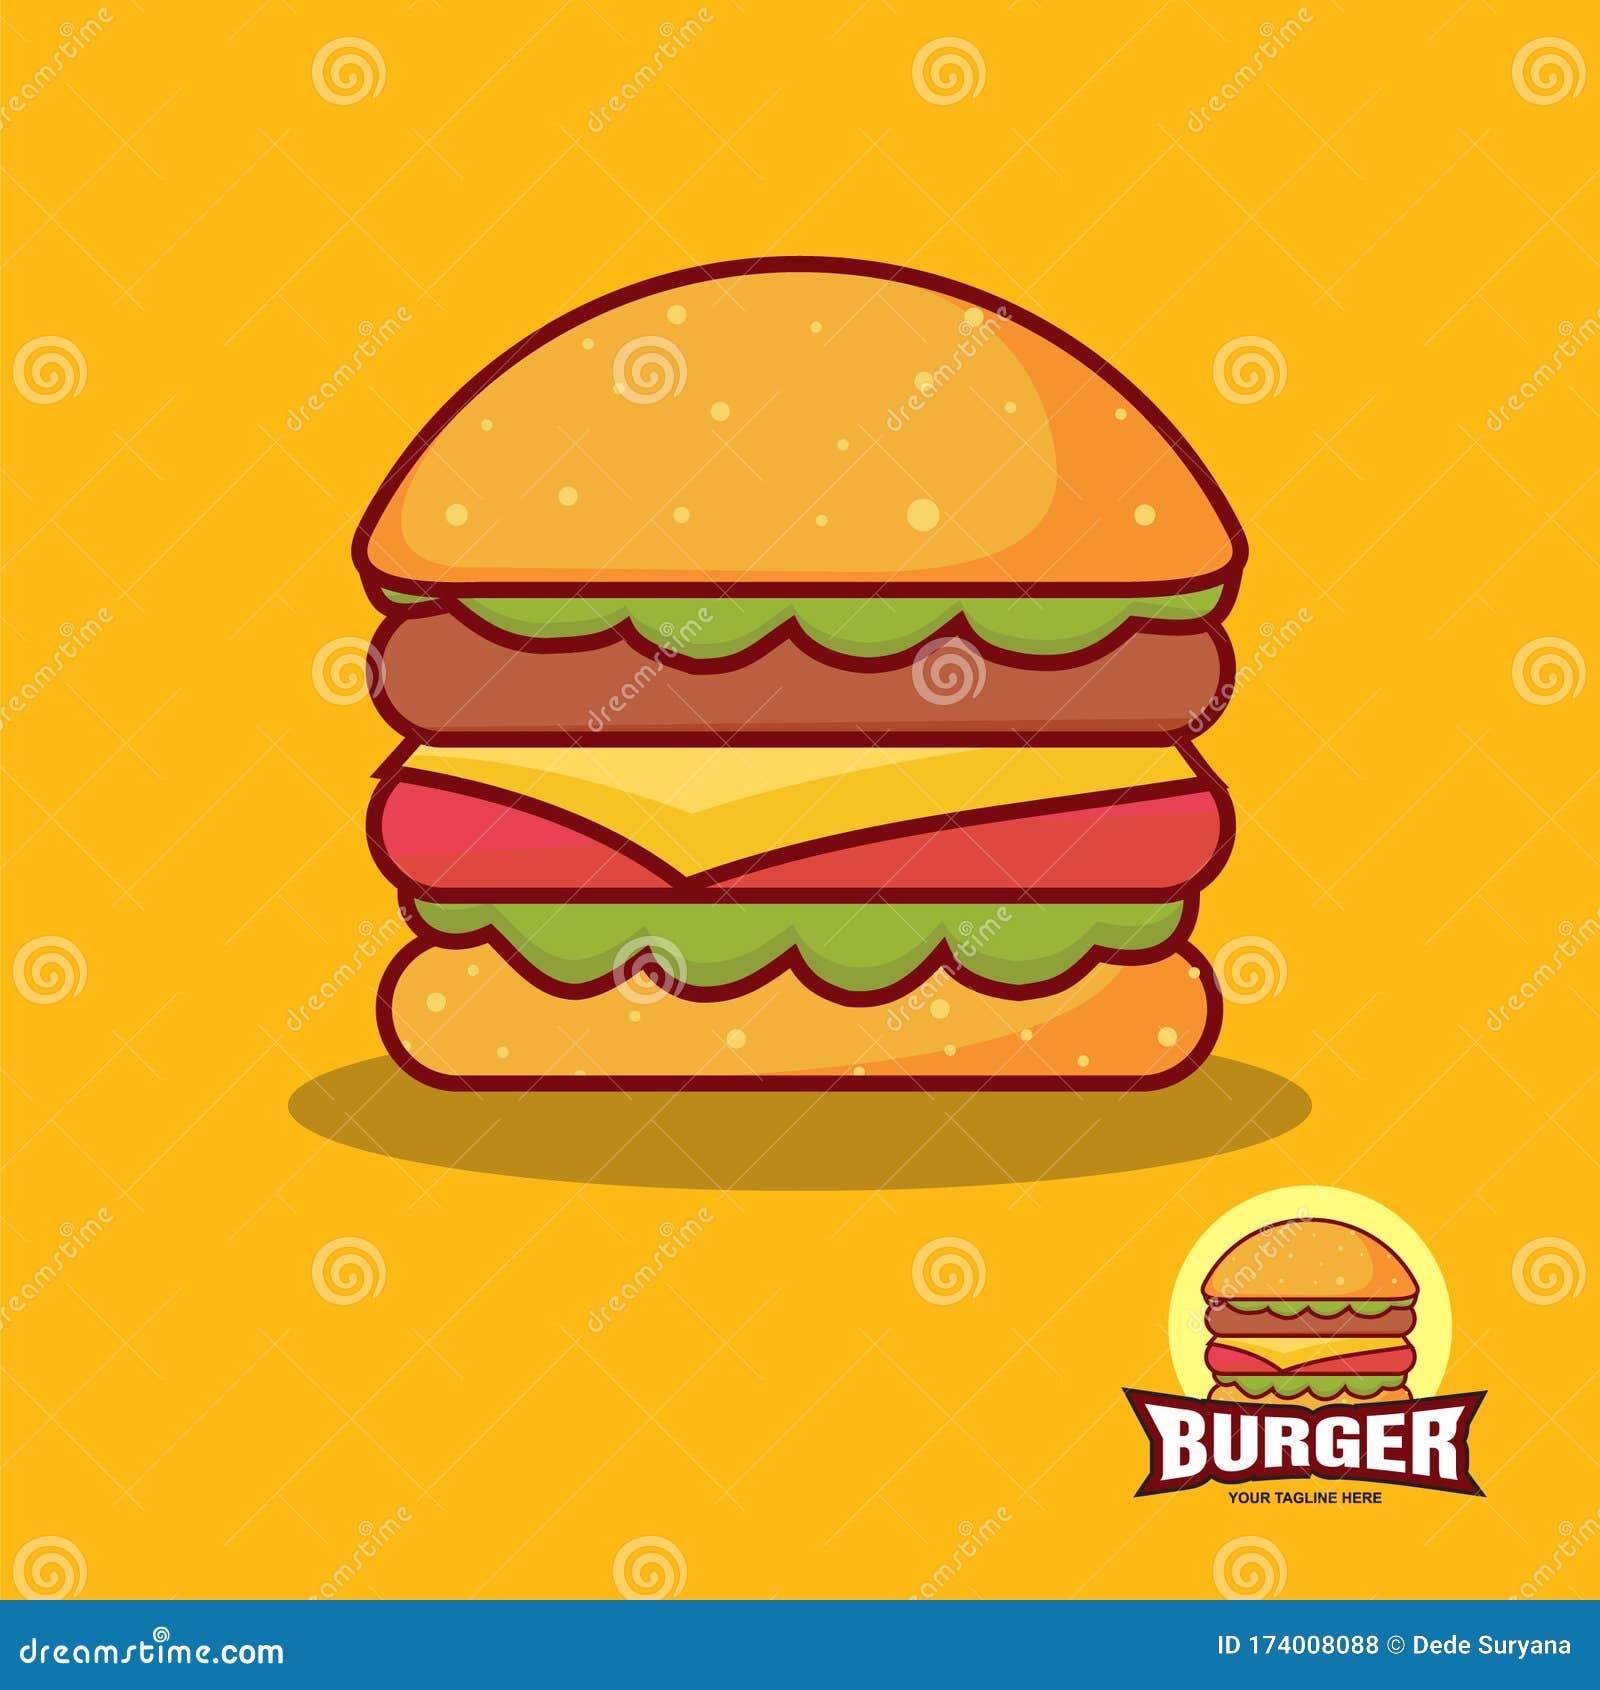 Kartun gambar burger Tutorial Menggambar